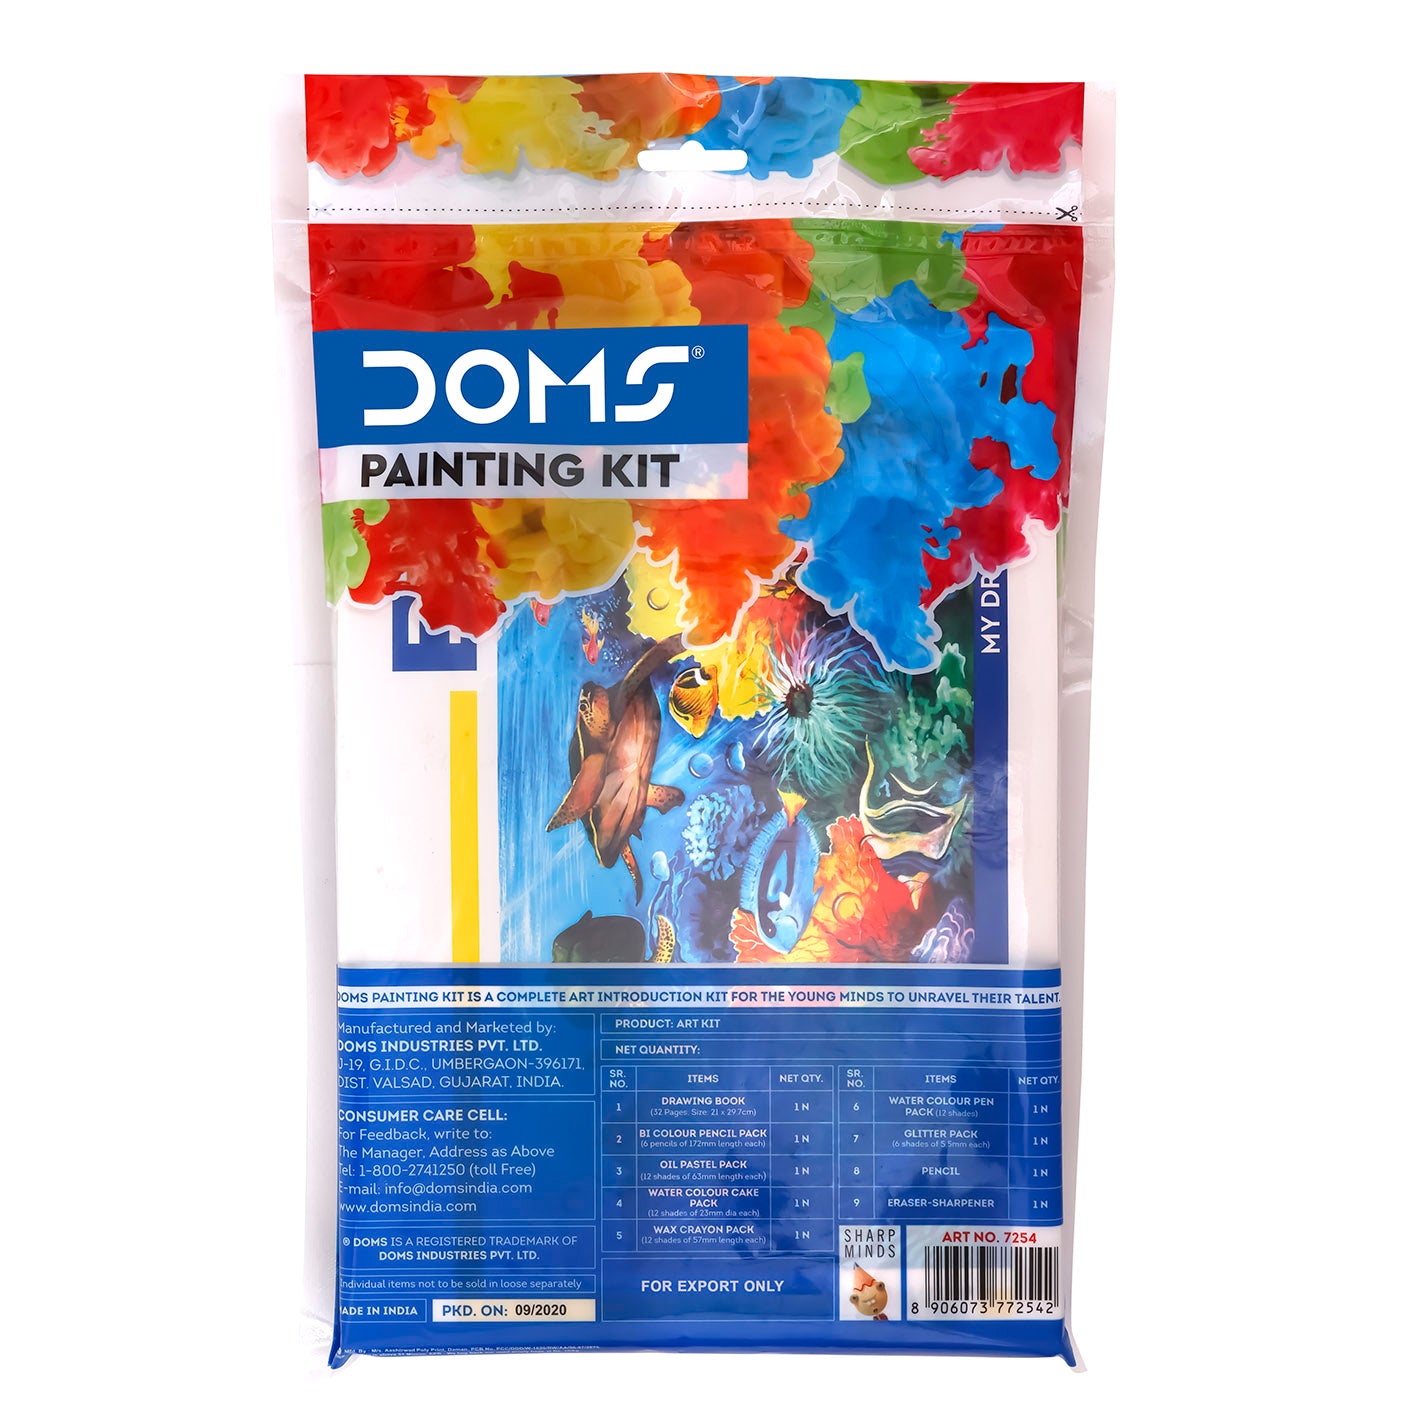 DOMS Painting Kit